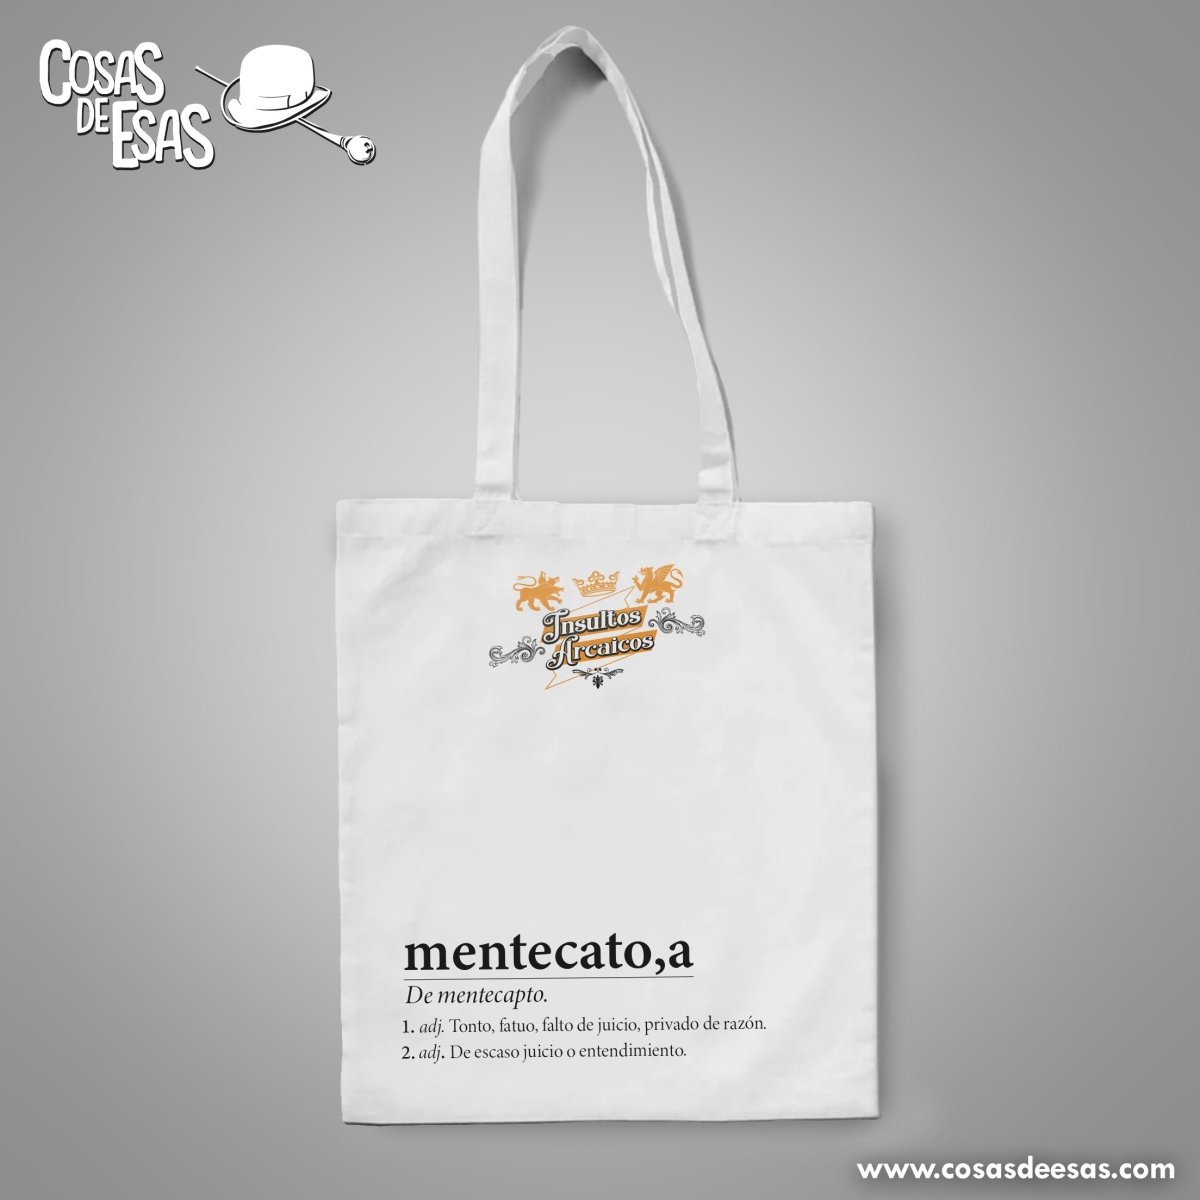 Tote Bag Mentecato/a - Cosas de Esas